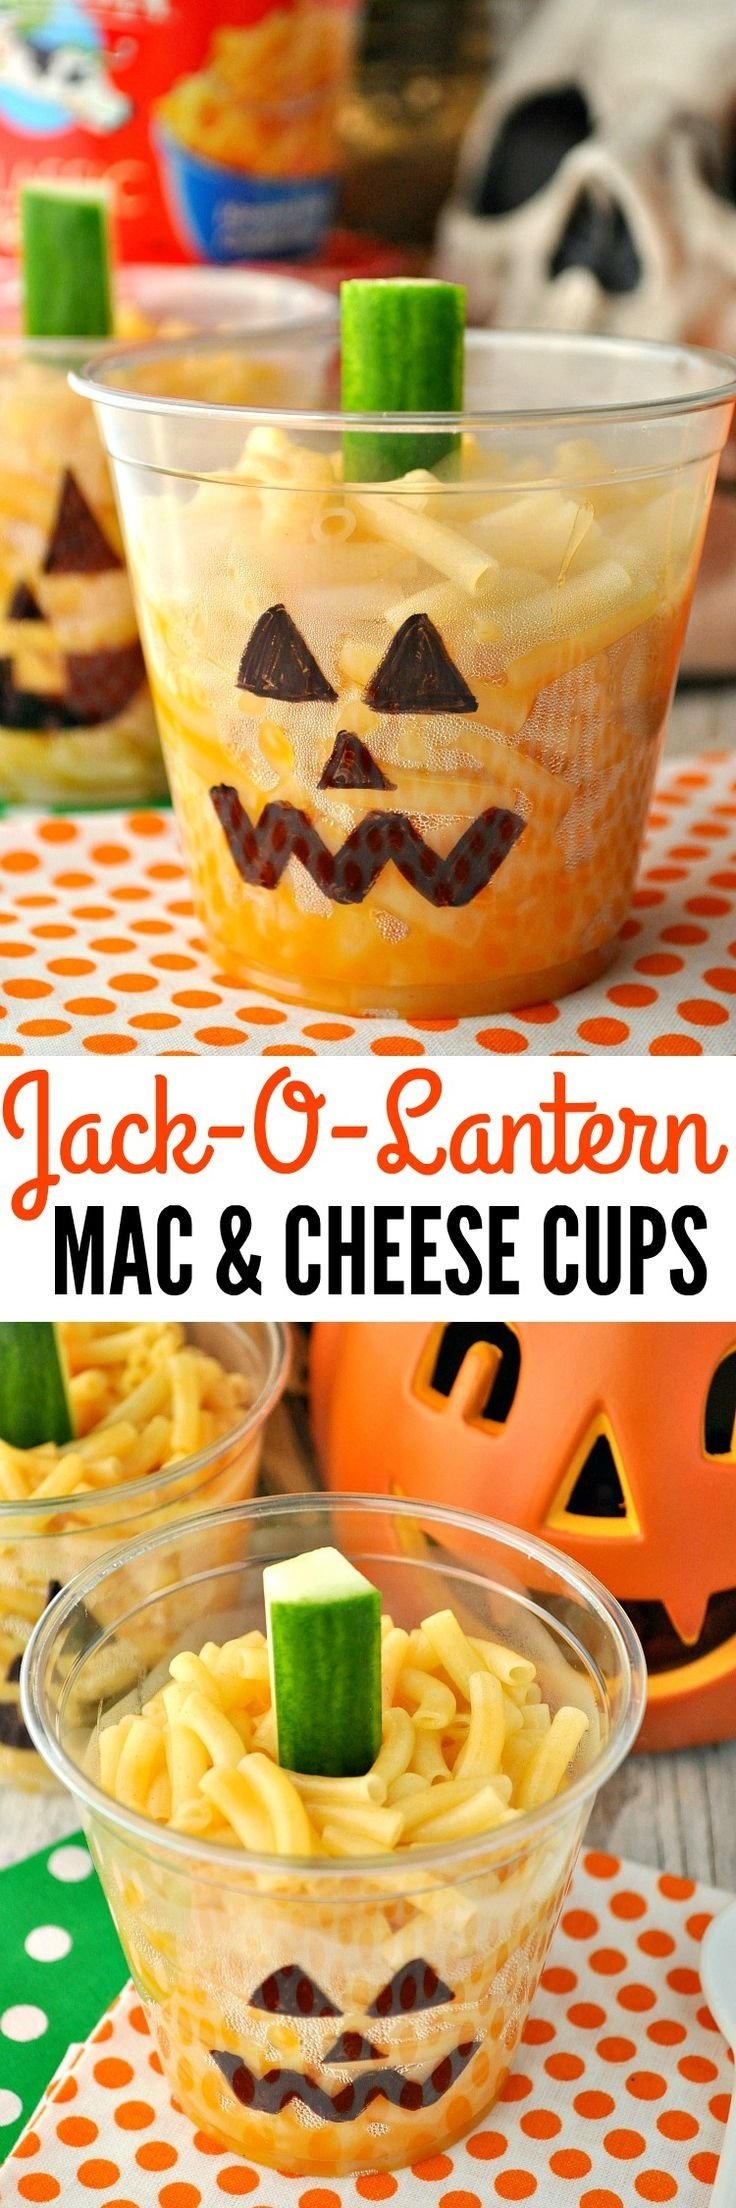 10 Lovely Halloween Party Food Ideas Pinterest 34 best tops booing images on pinterest halloween parties 2023